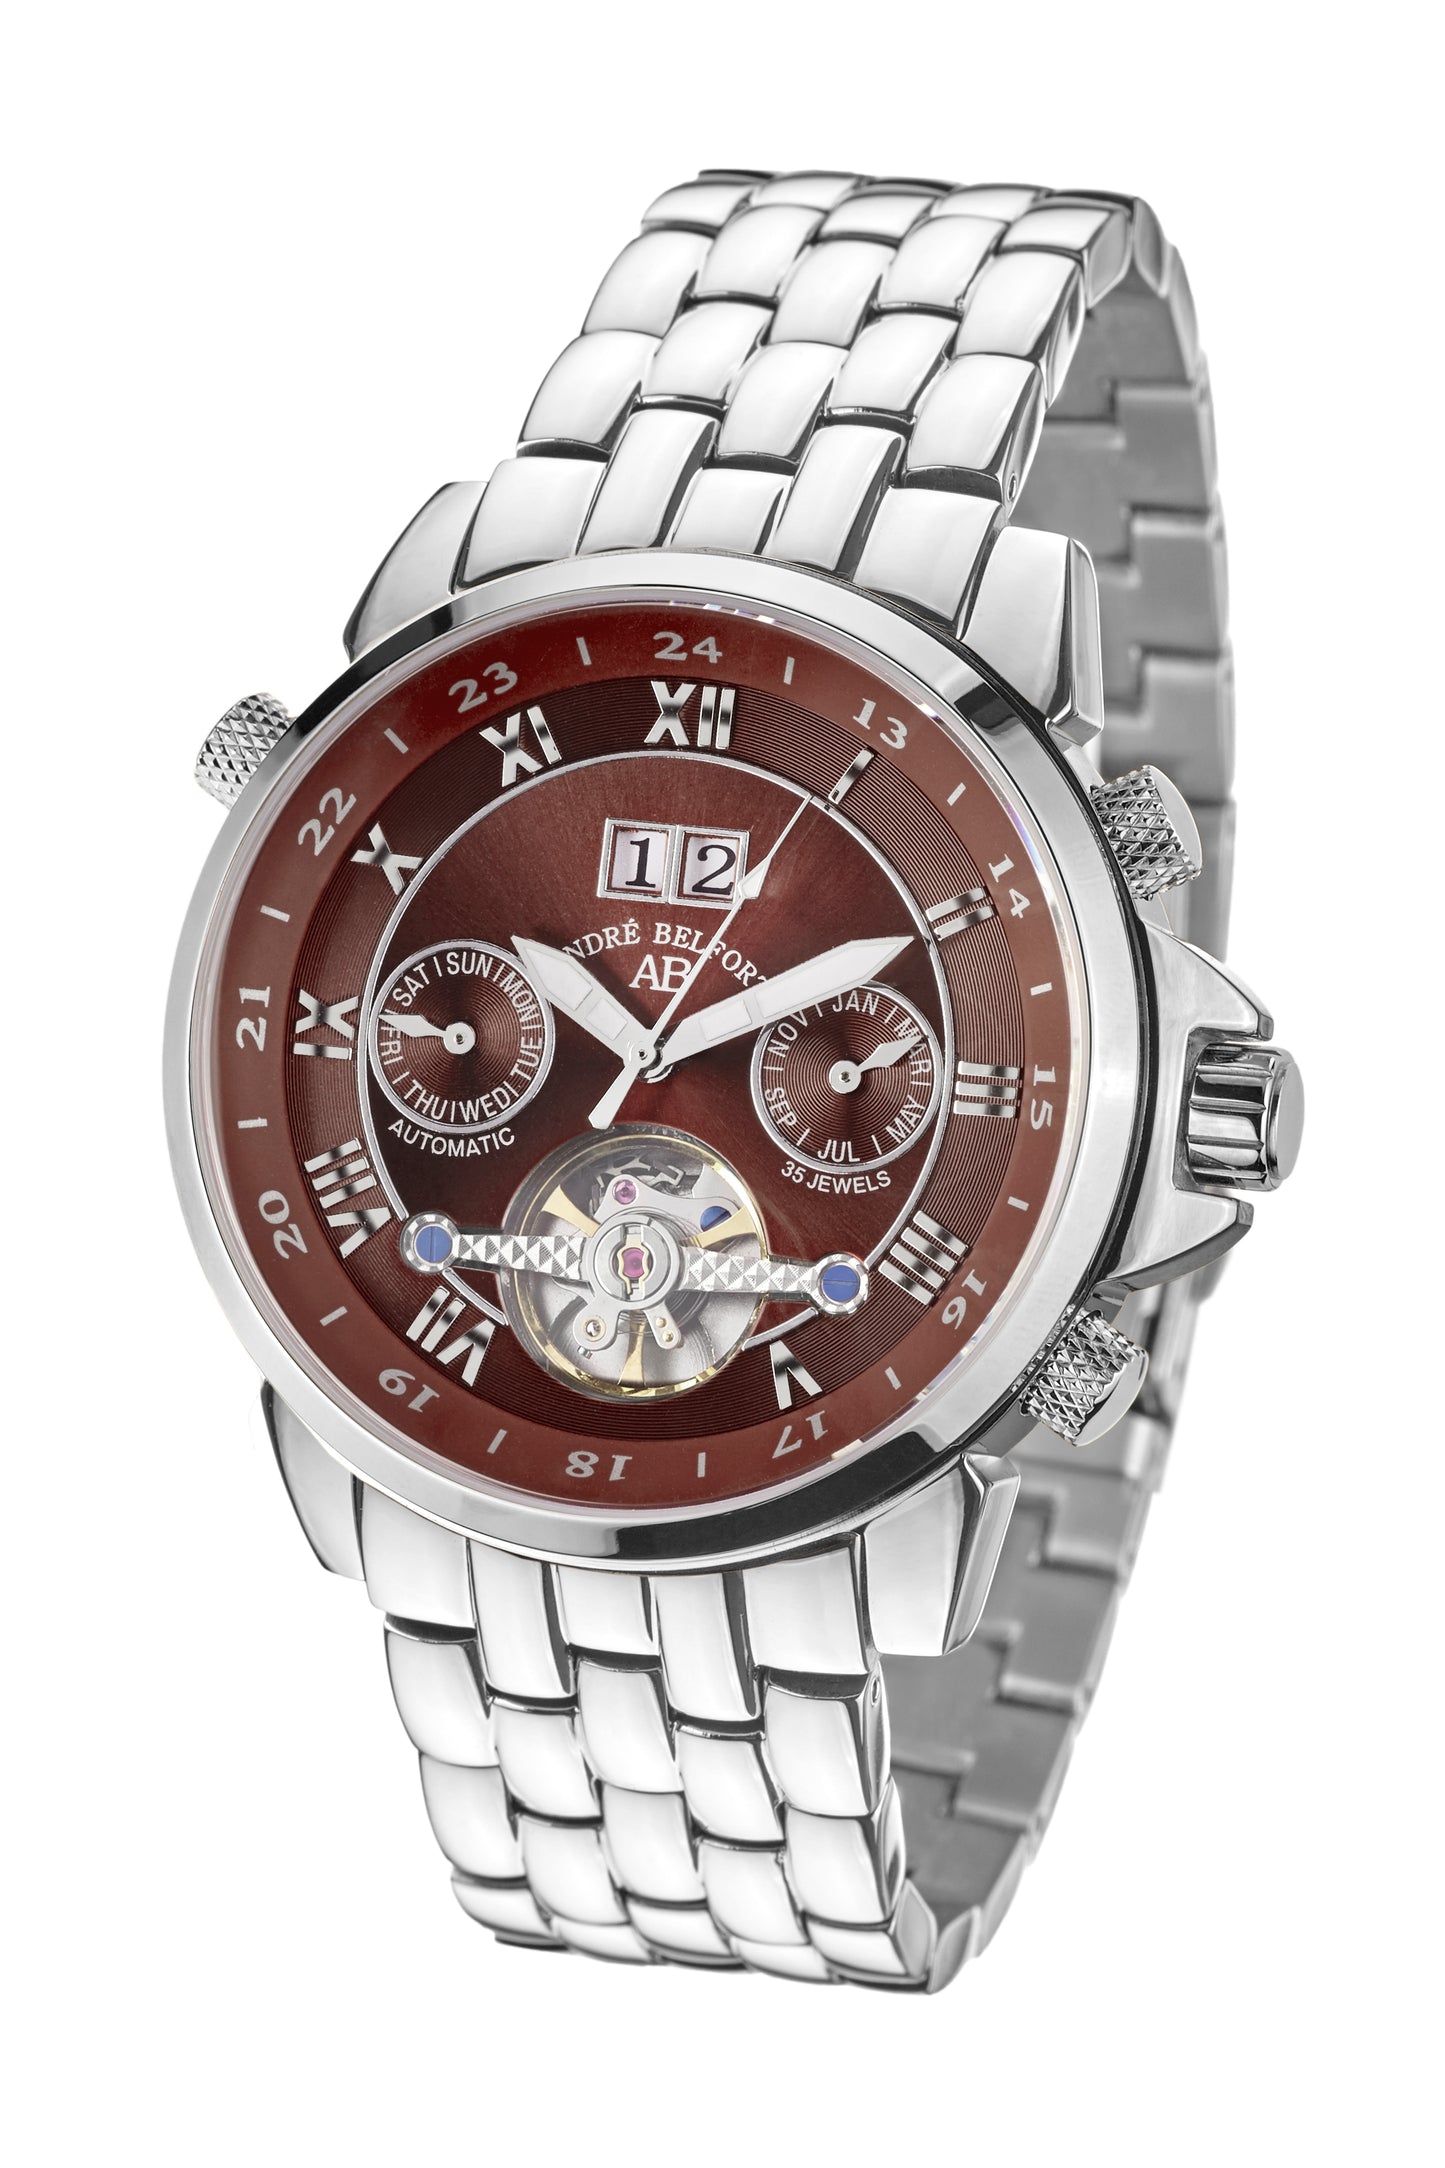 Automatic watches — Étoile Polaire — André Belfort — brown